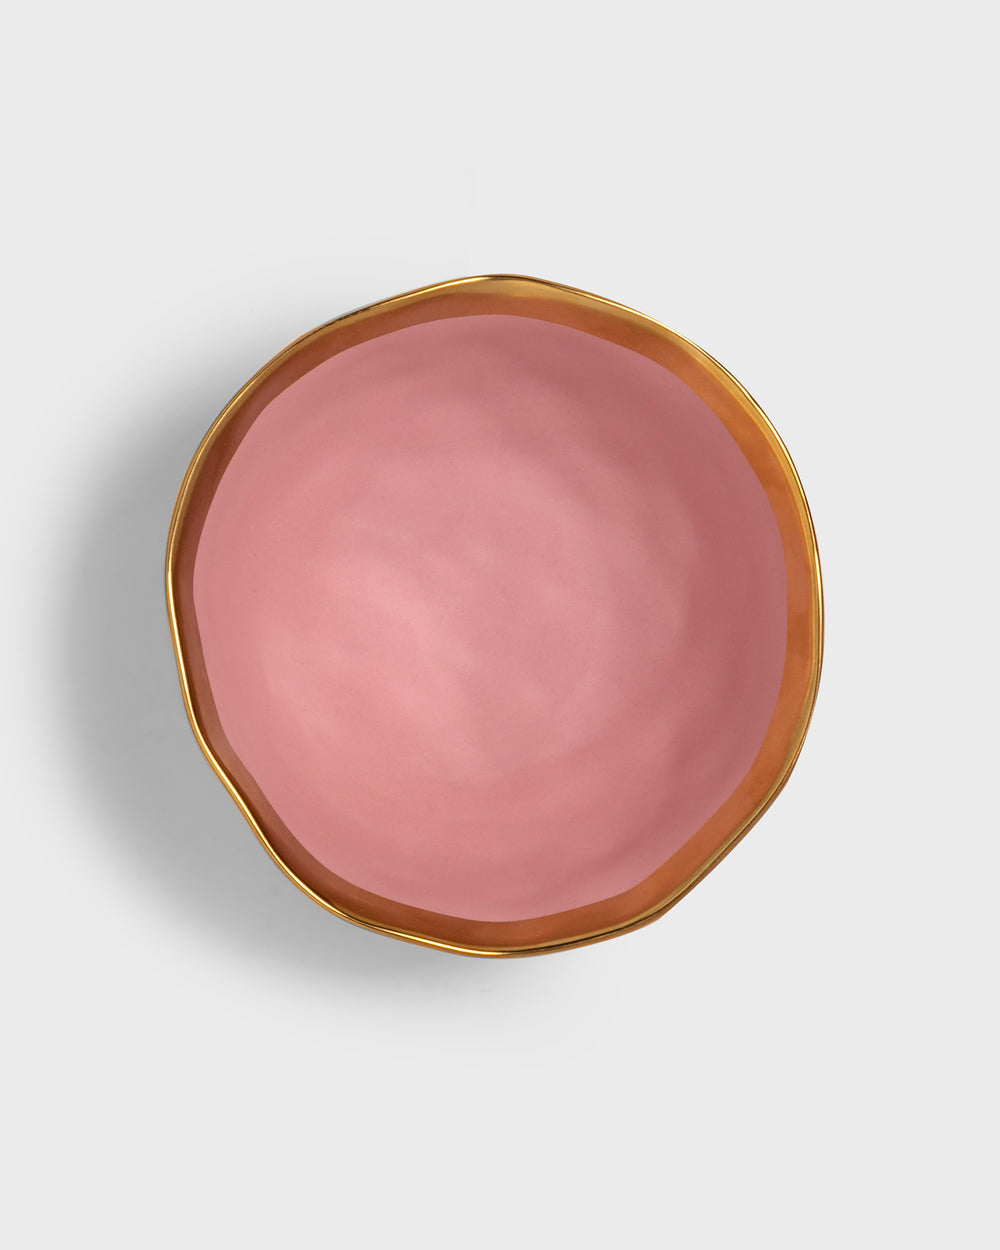 Tania Bulhoes Bowl Mediterraneo Pink